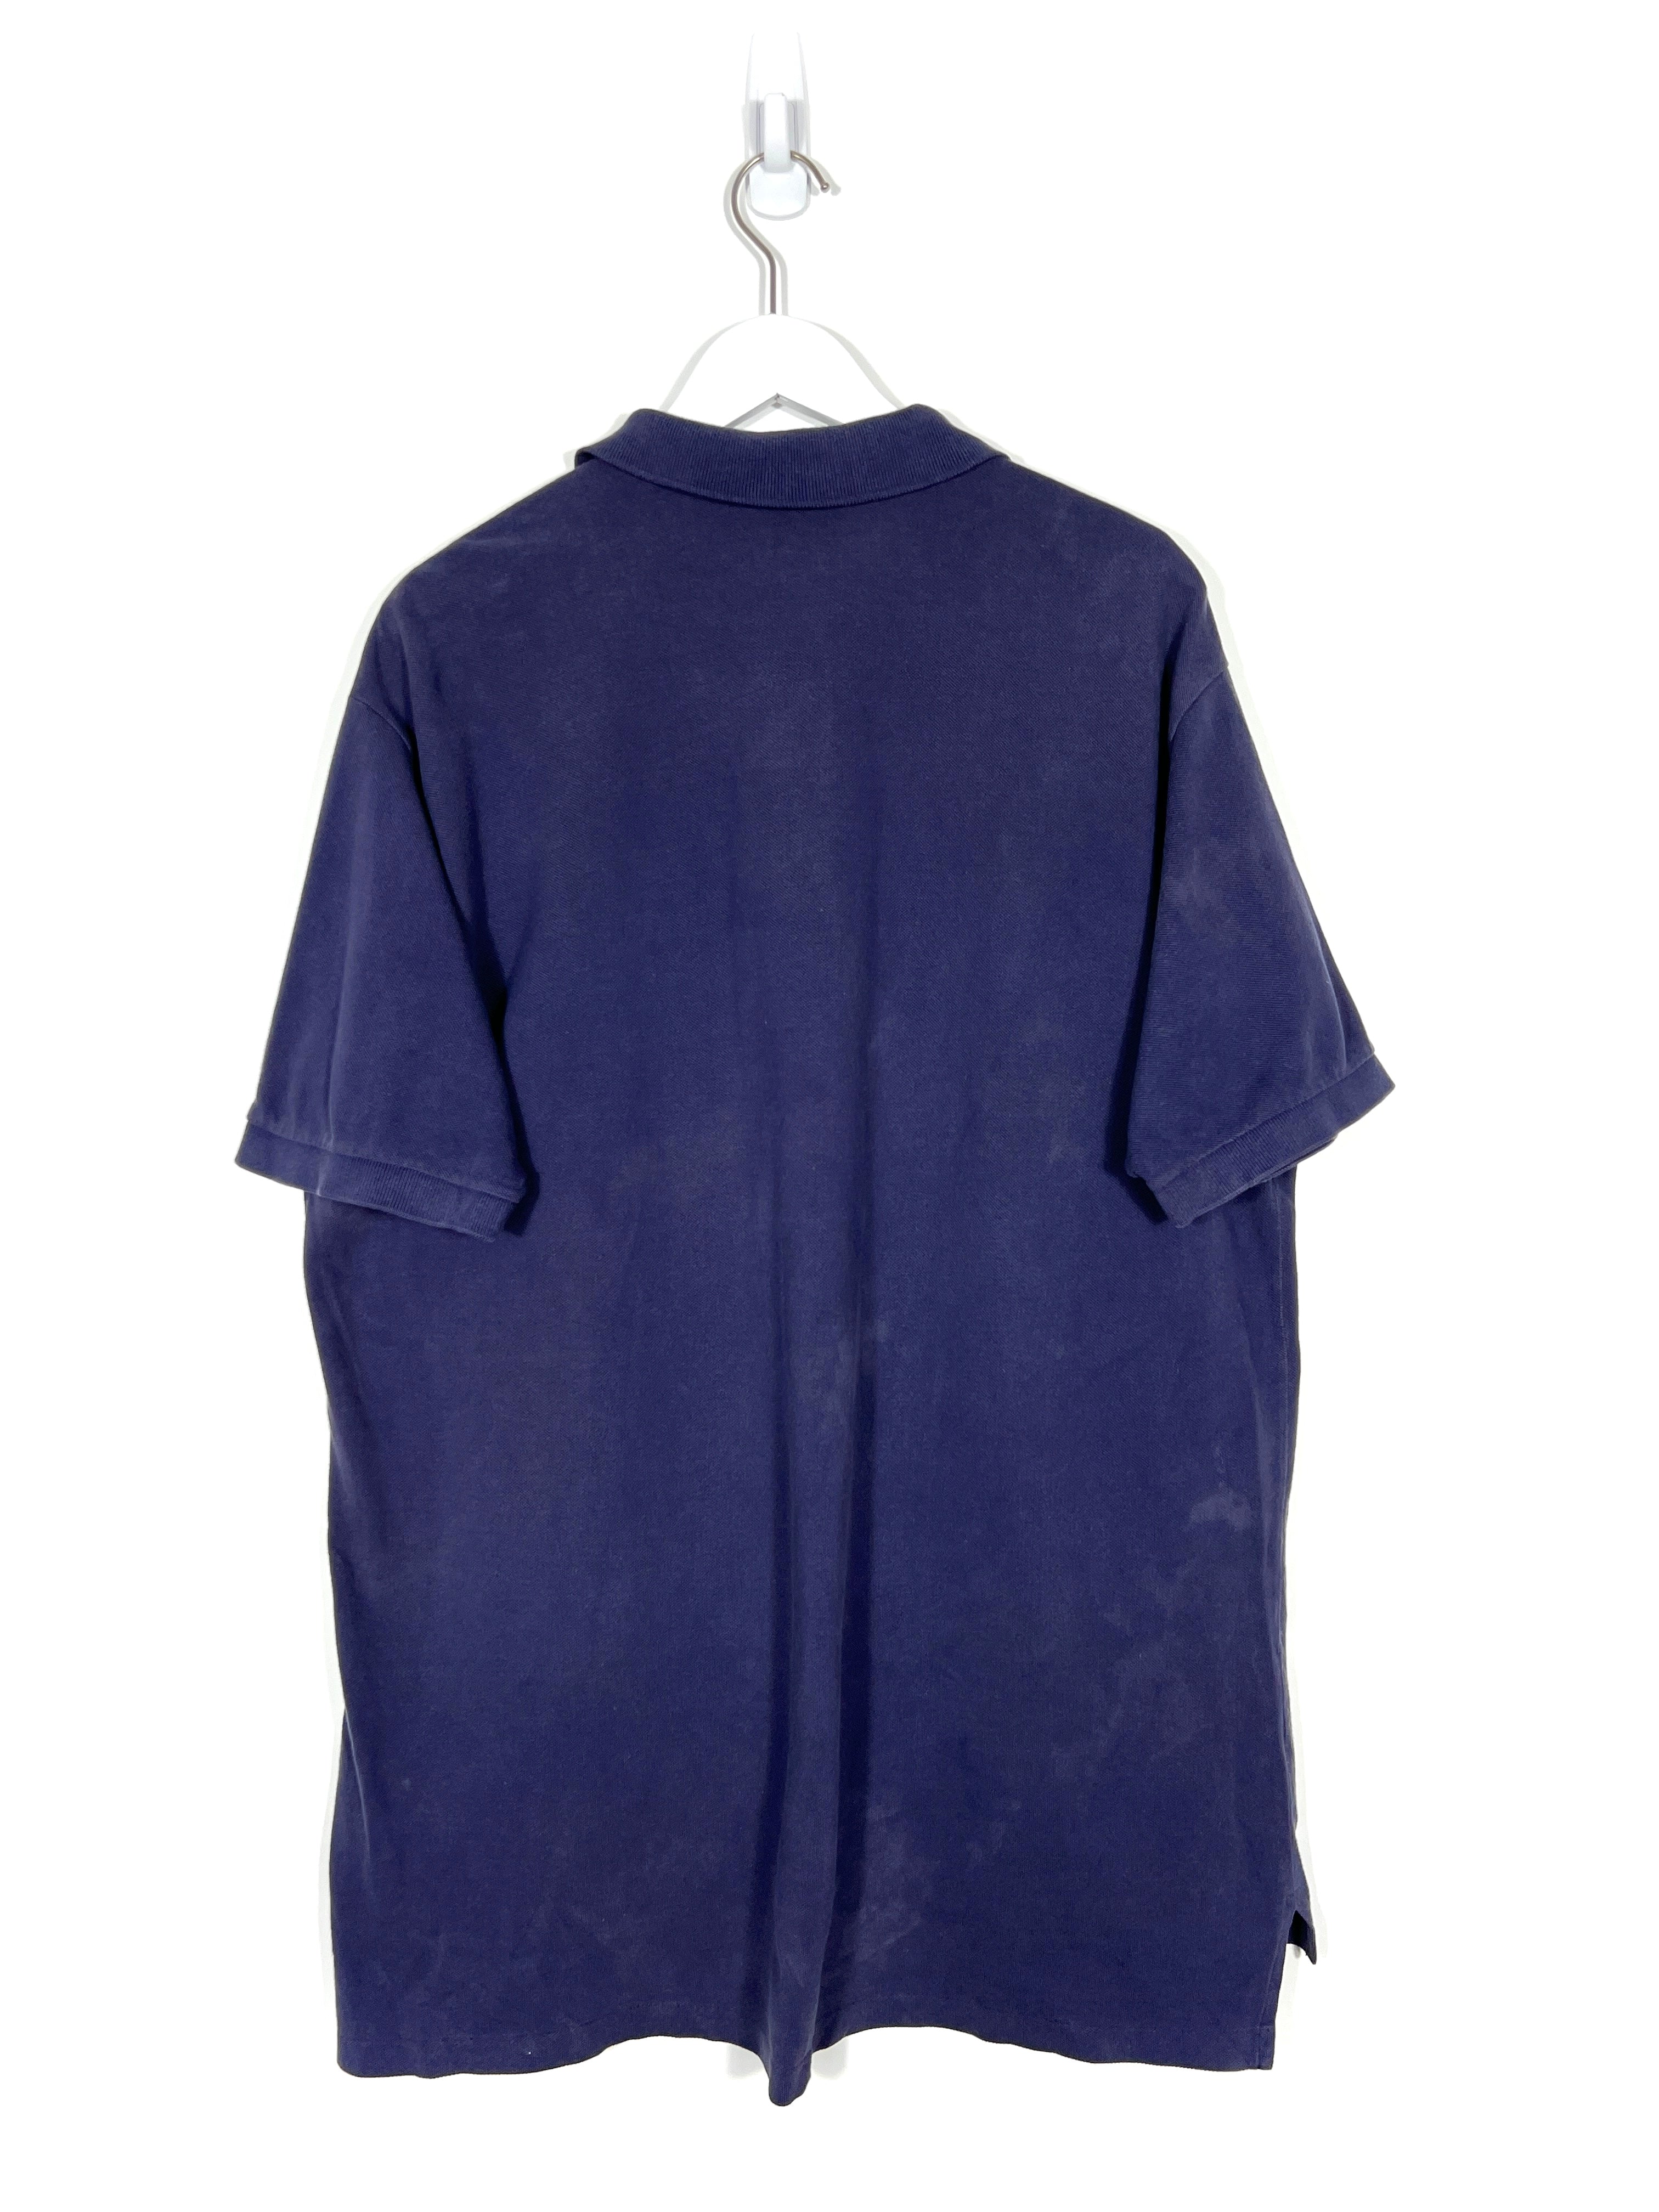 Vintage Lacoste Polo Shirt - Men's XL